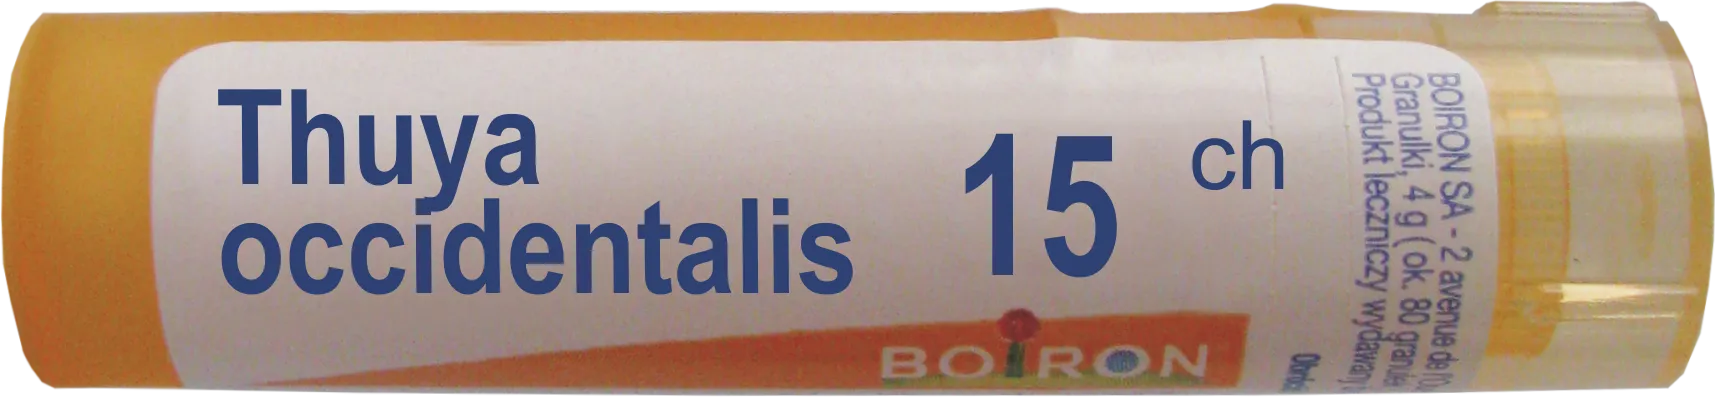 Boiron Thuya occidentalis 15 CH, granulki, 4 g